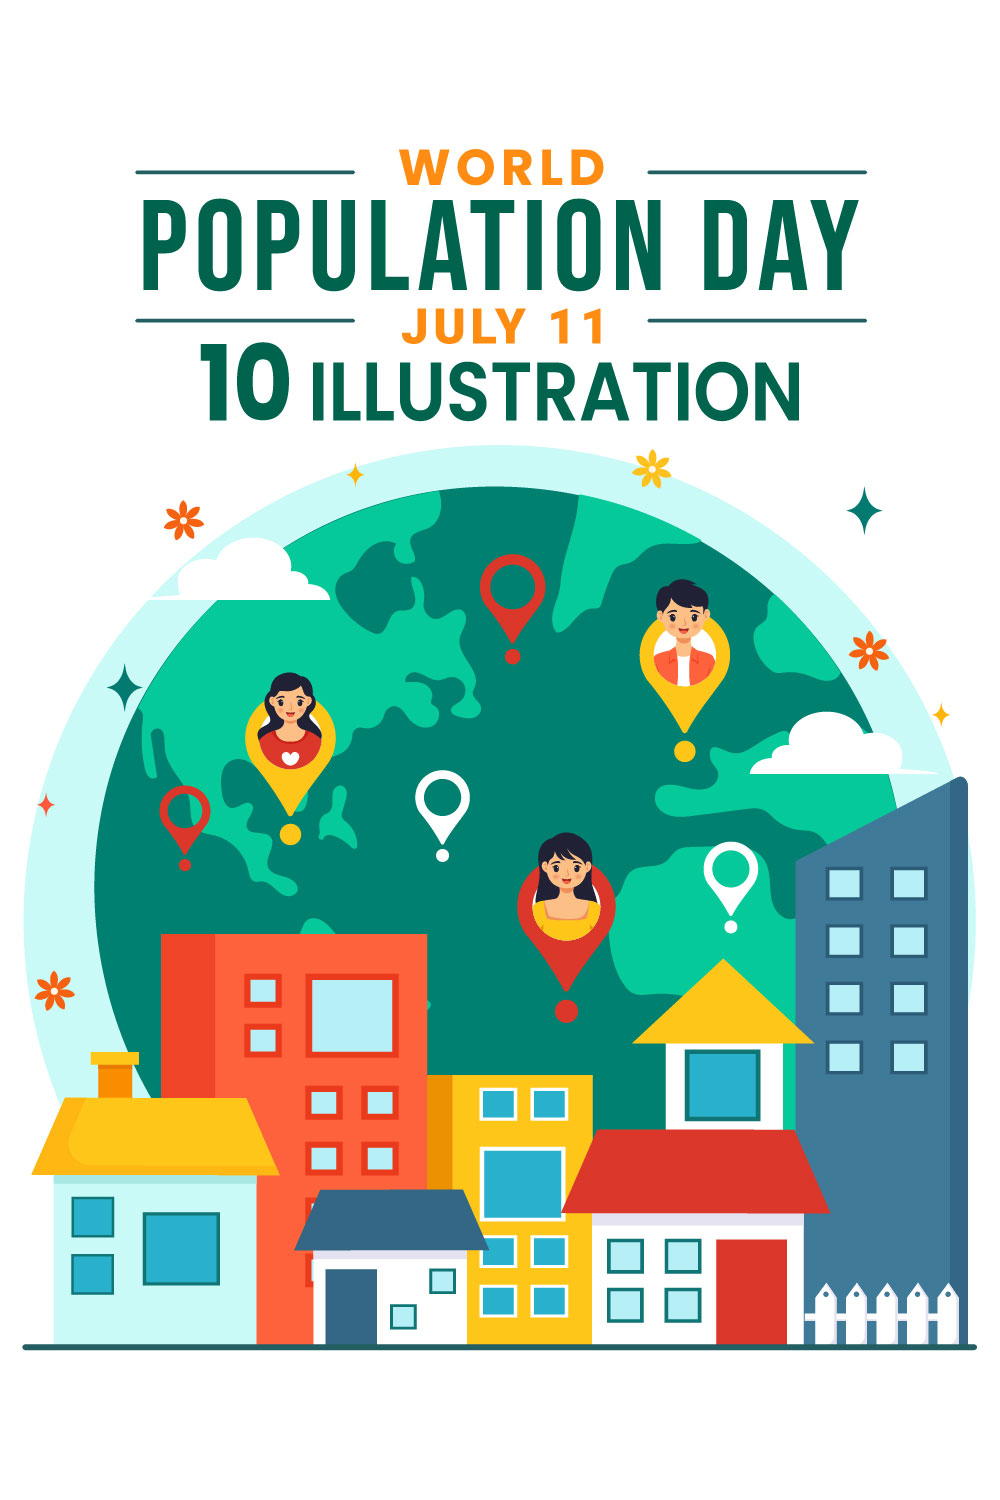 10 World Population Day Illustration pinterest preview image.